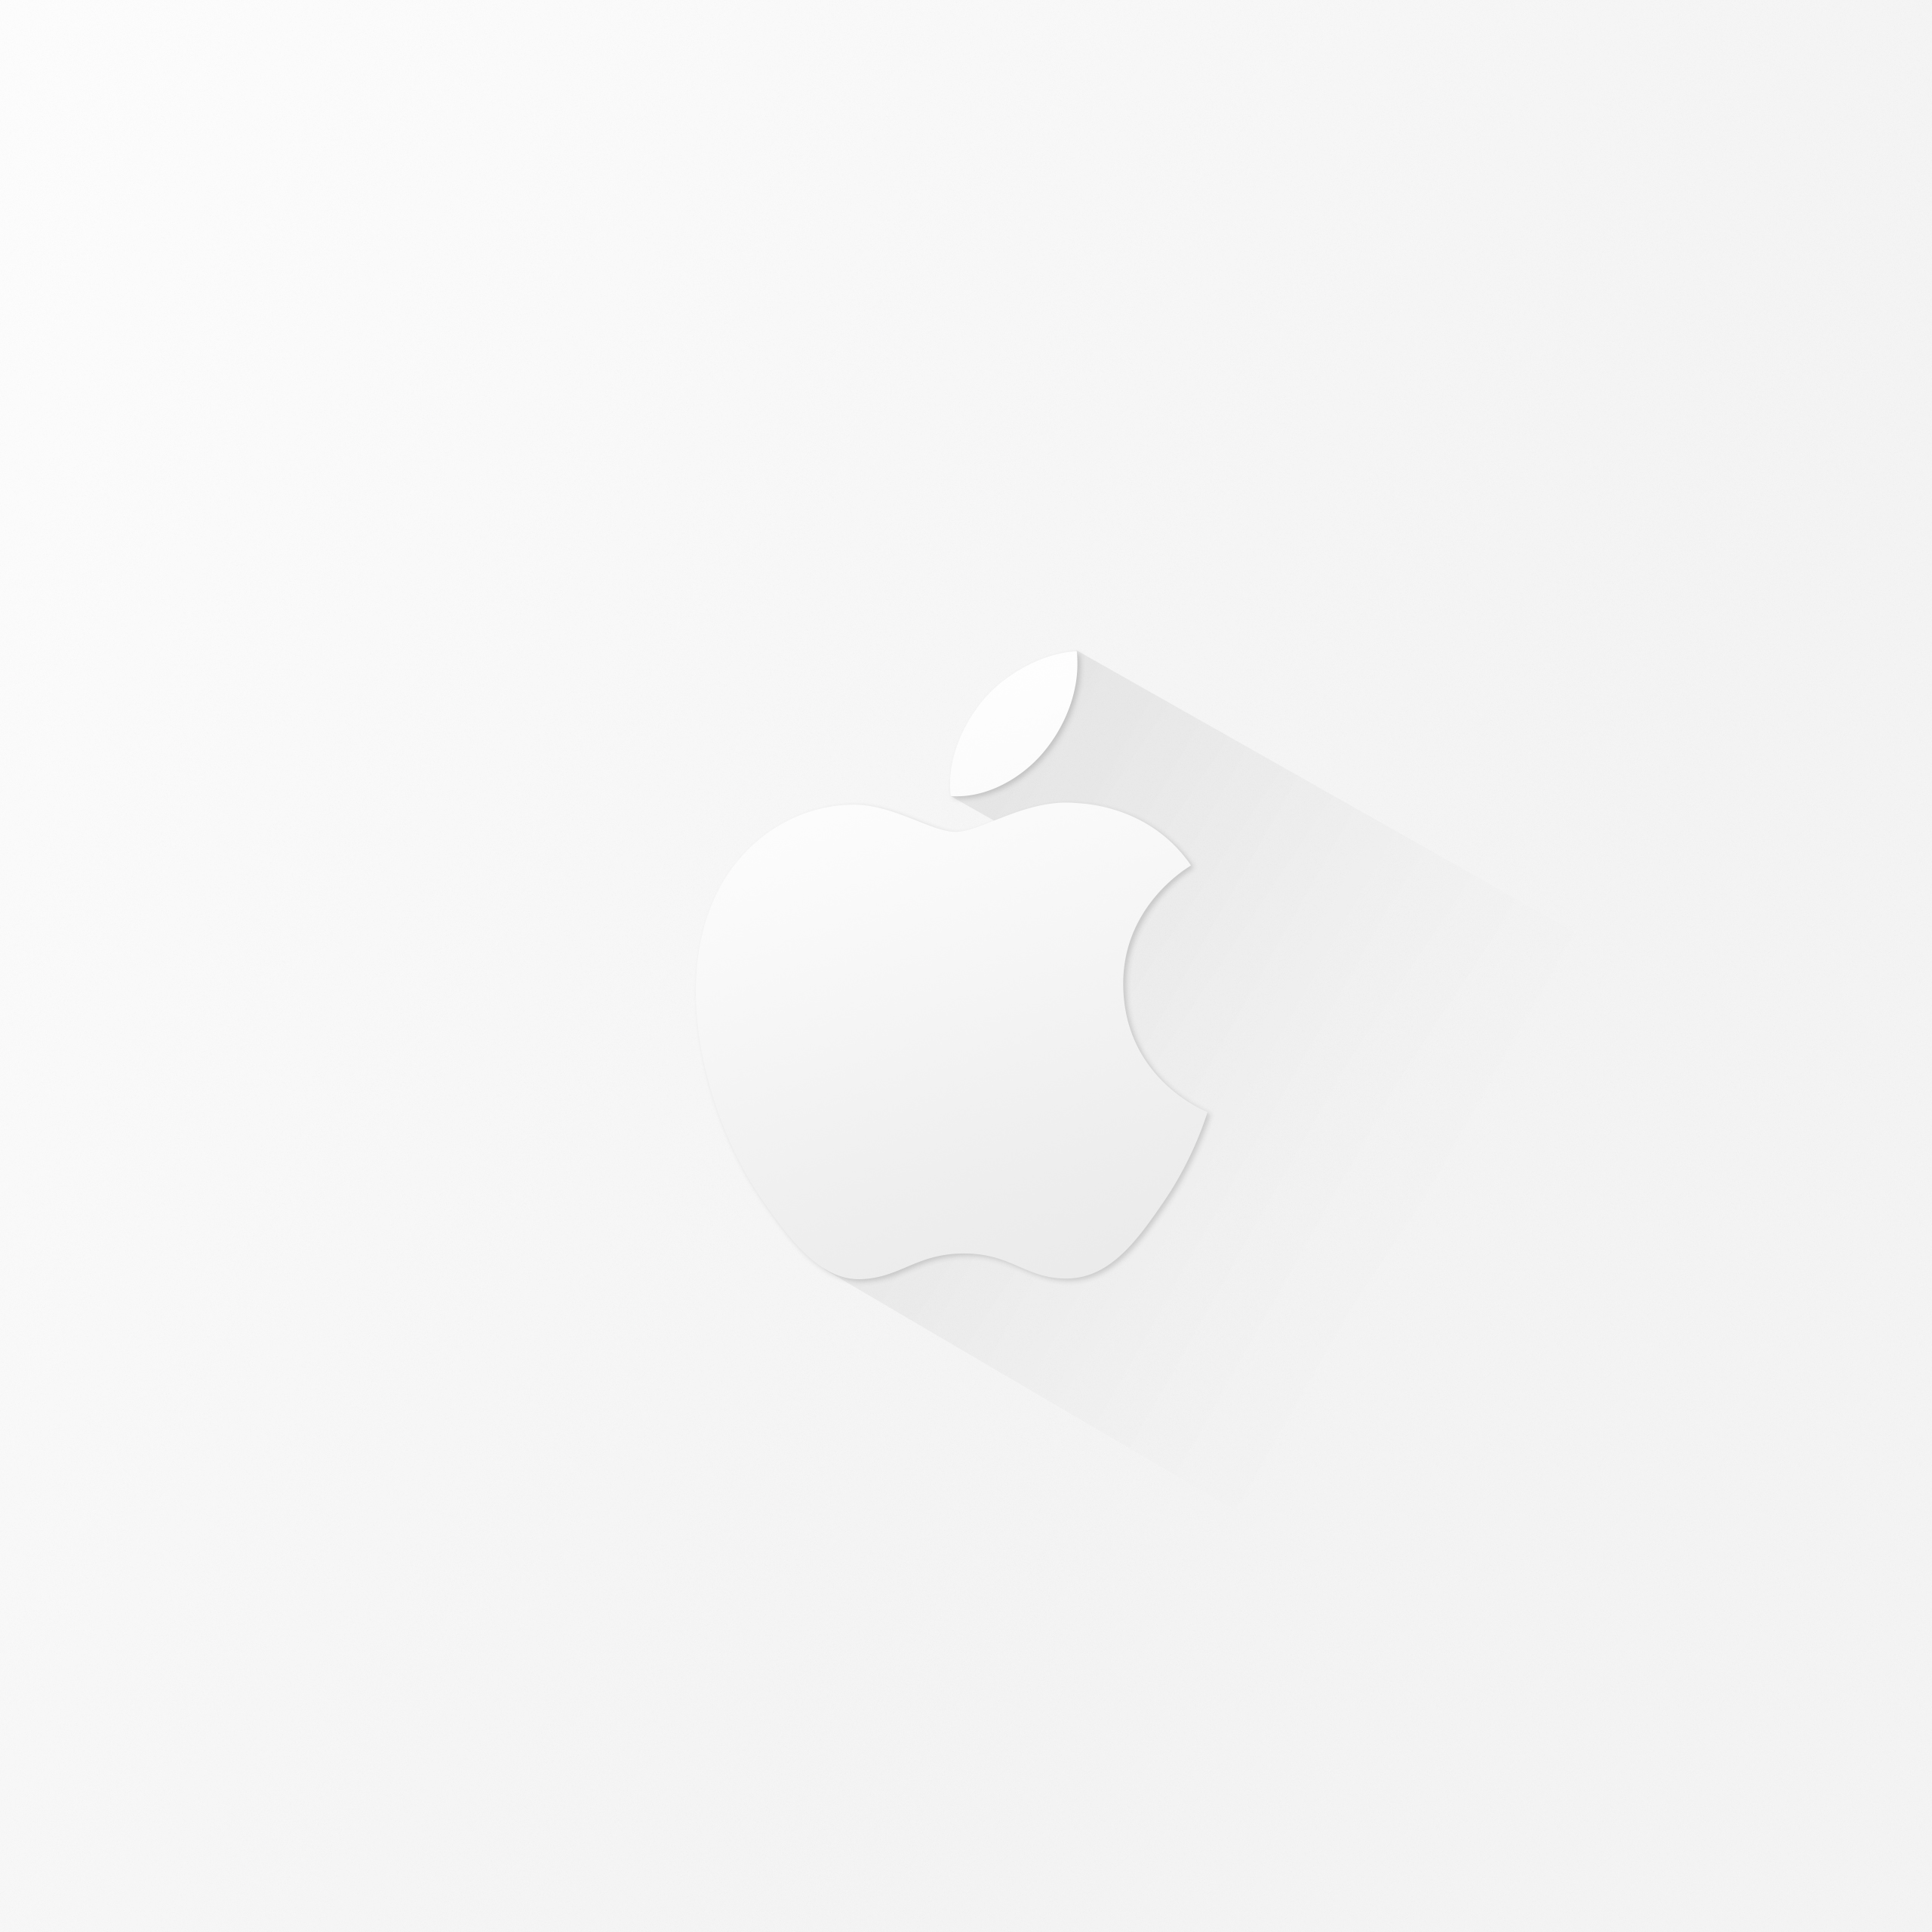 Appleの9月9日イベントの壁紙デスクトップ Iphone Ipad用が公開される Bitzedge